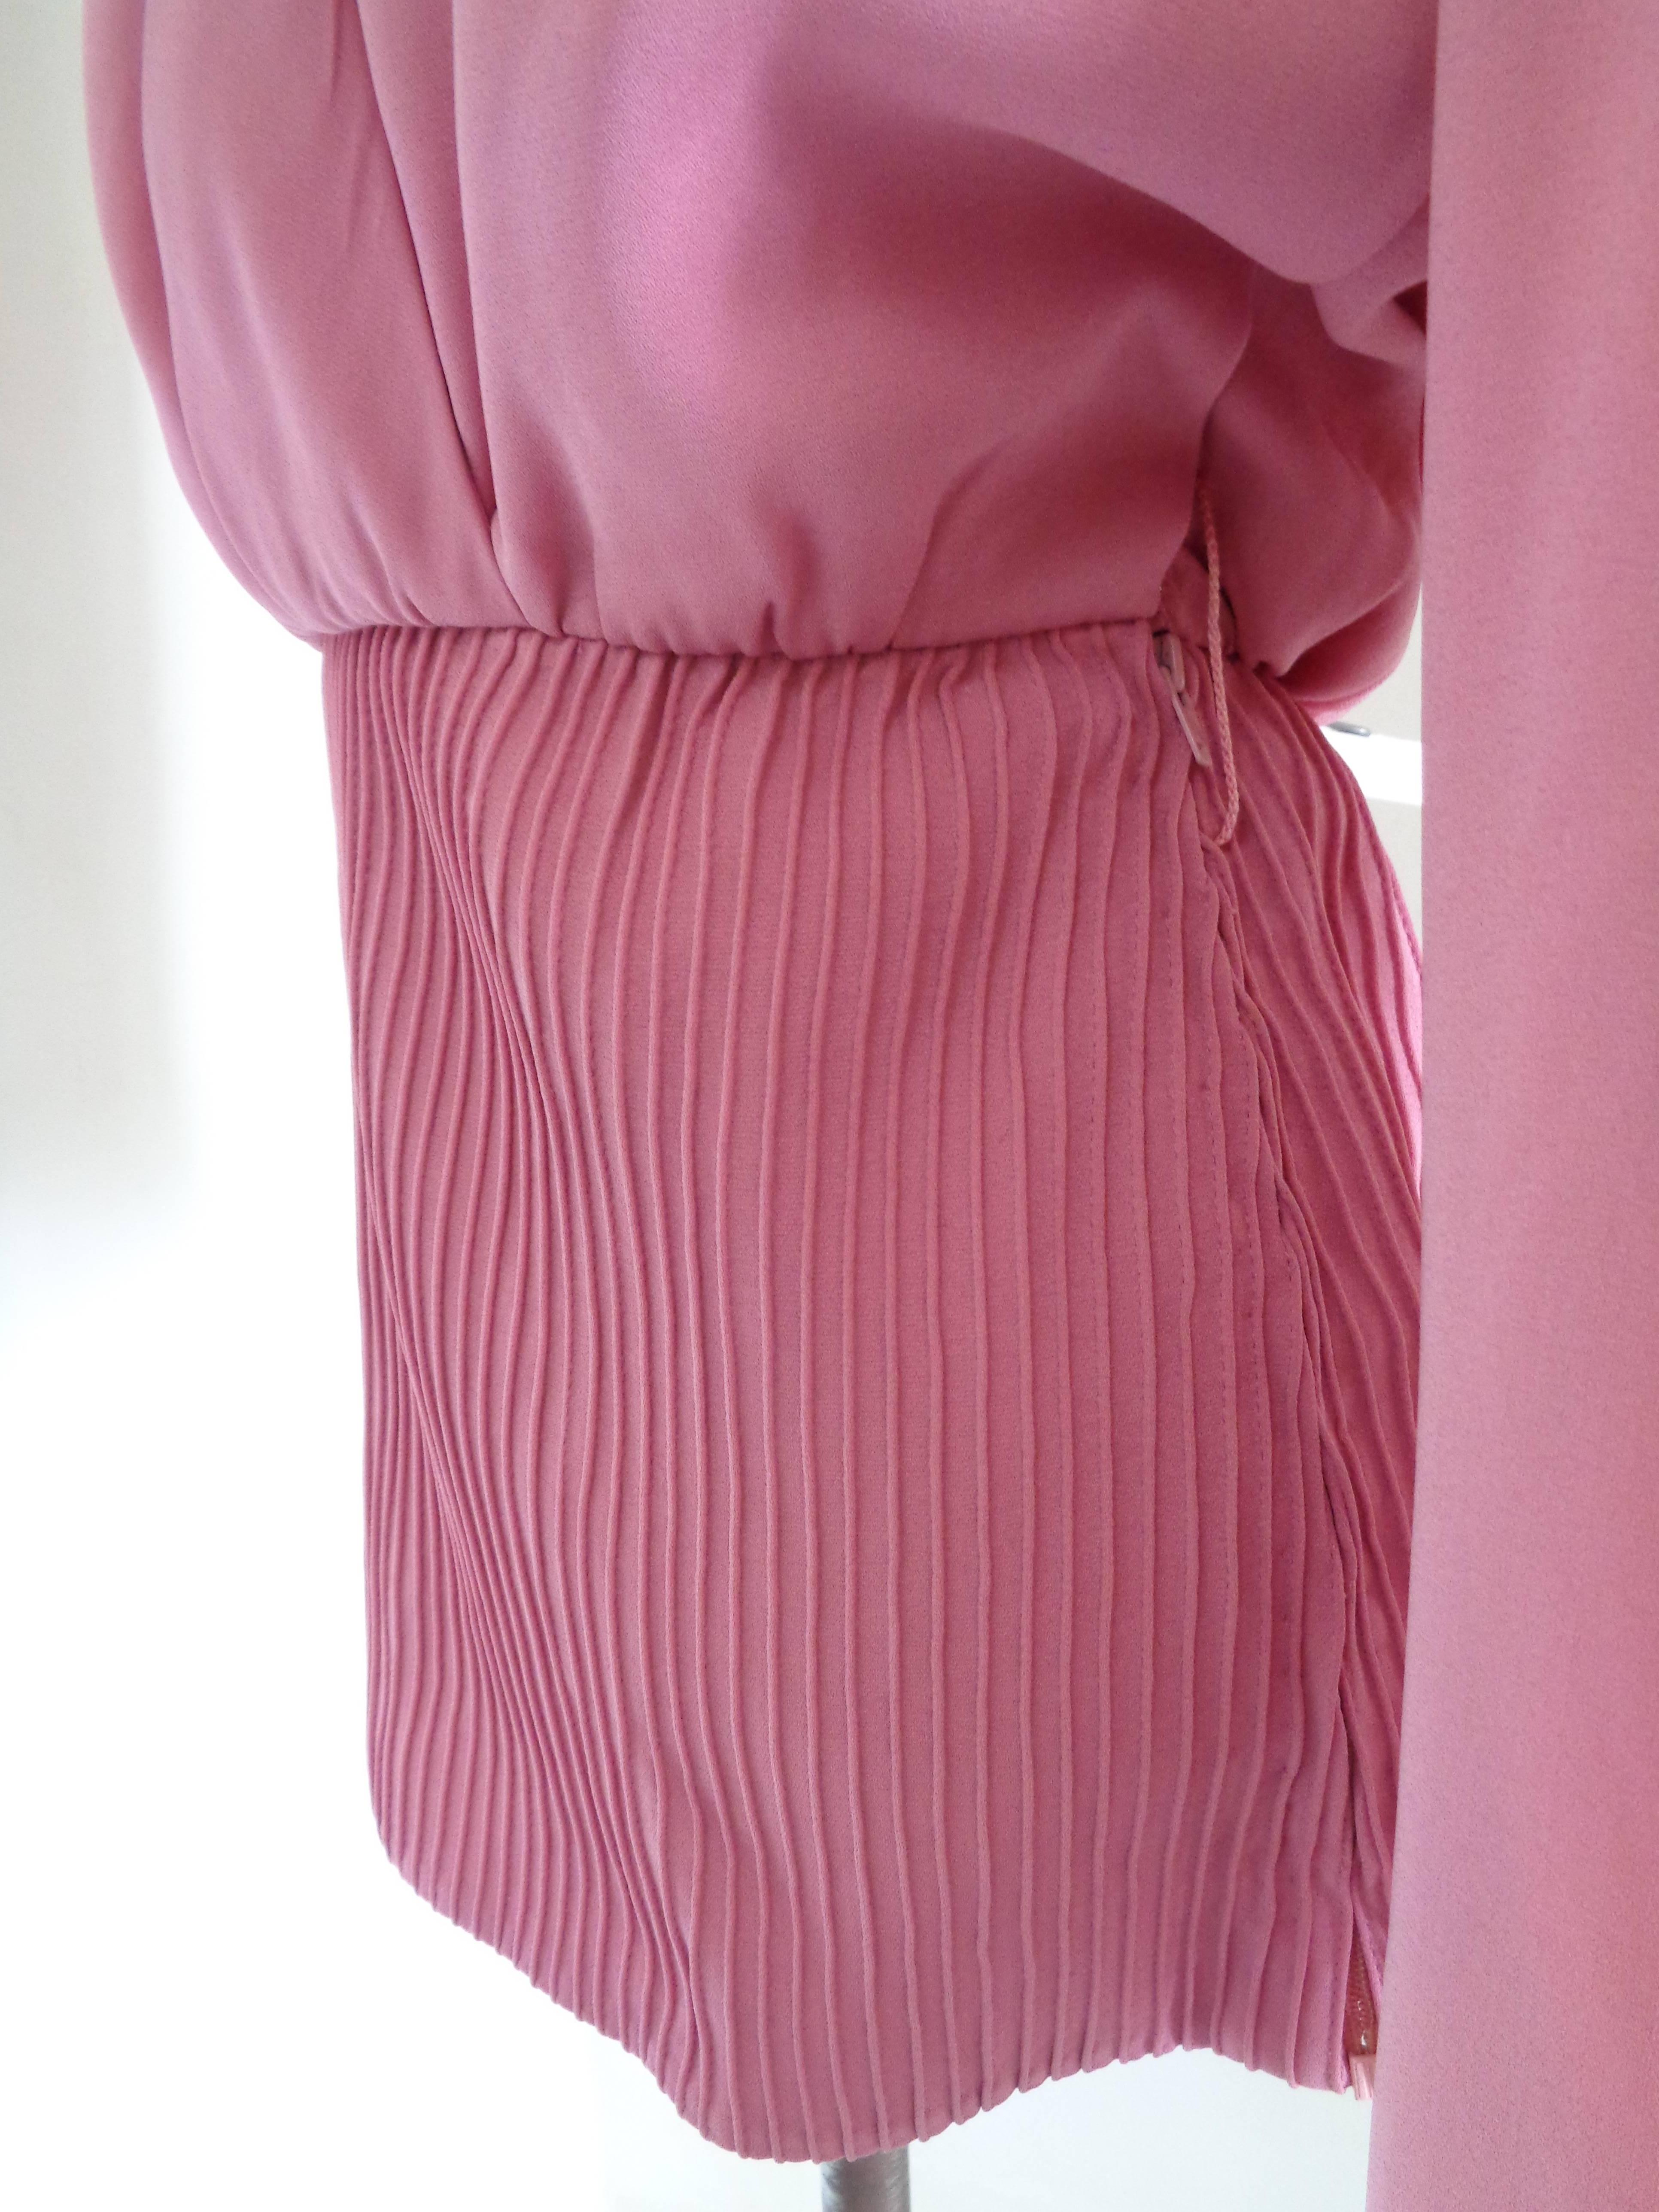 Valentino Boutique Pink Silk Sweater Blouse In New Condition For Sale In Capri, IT